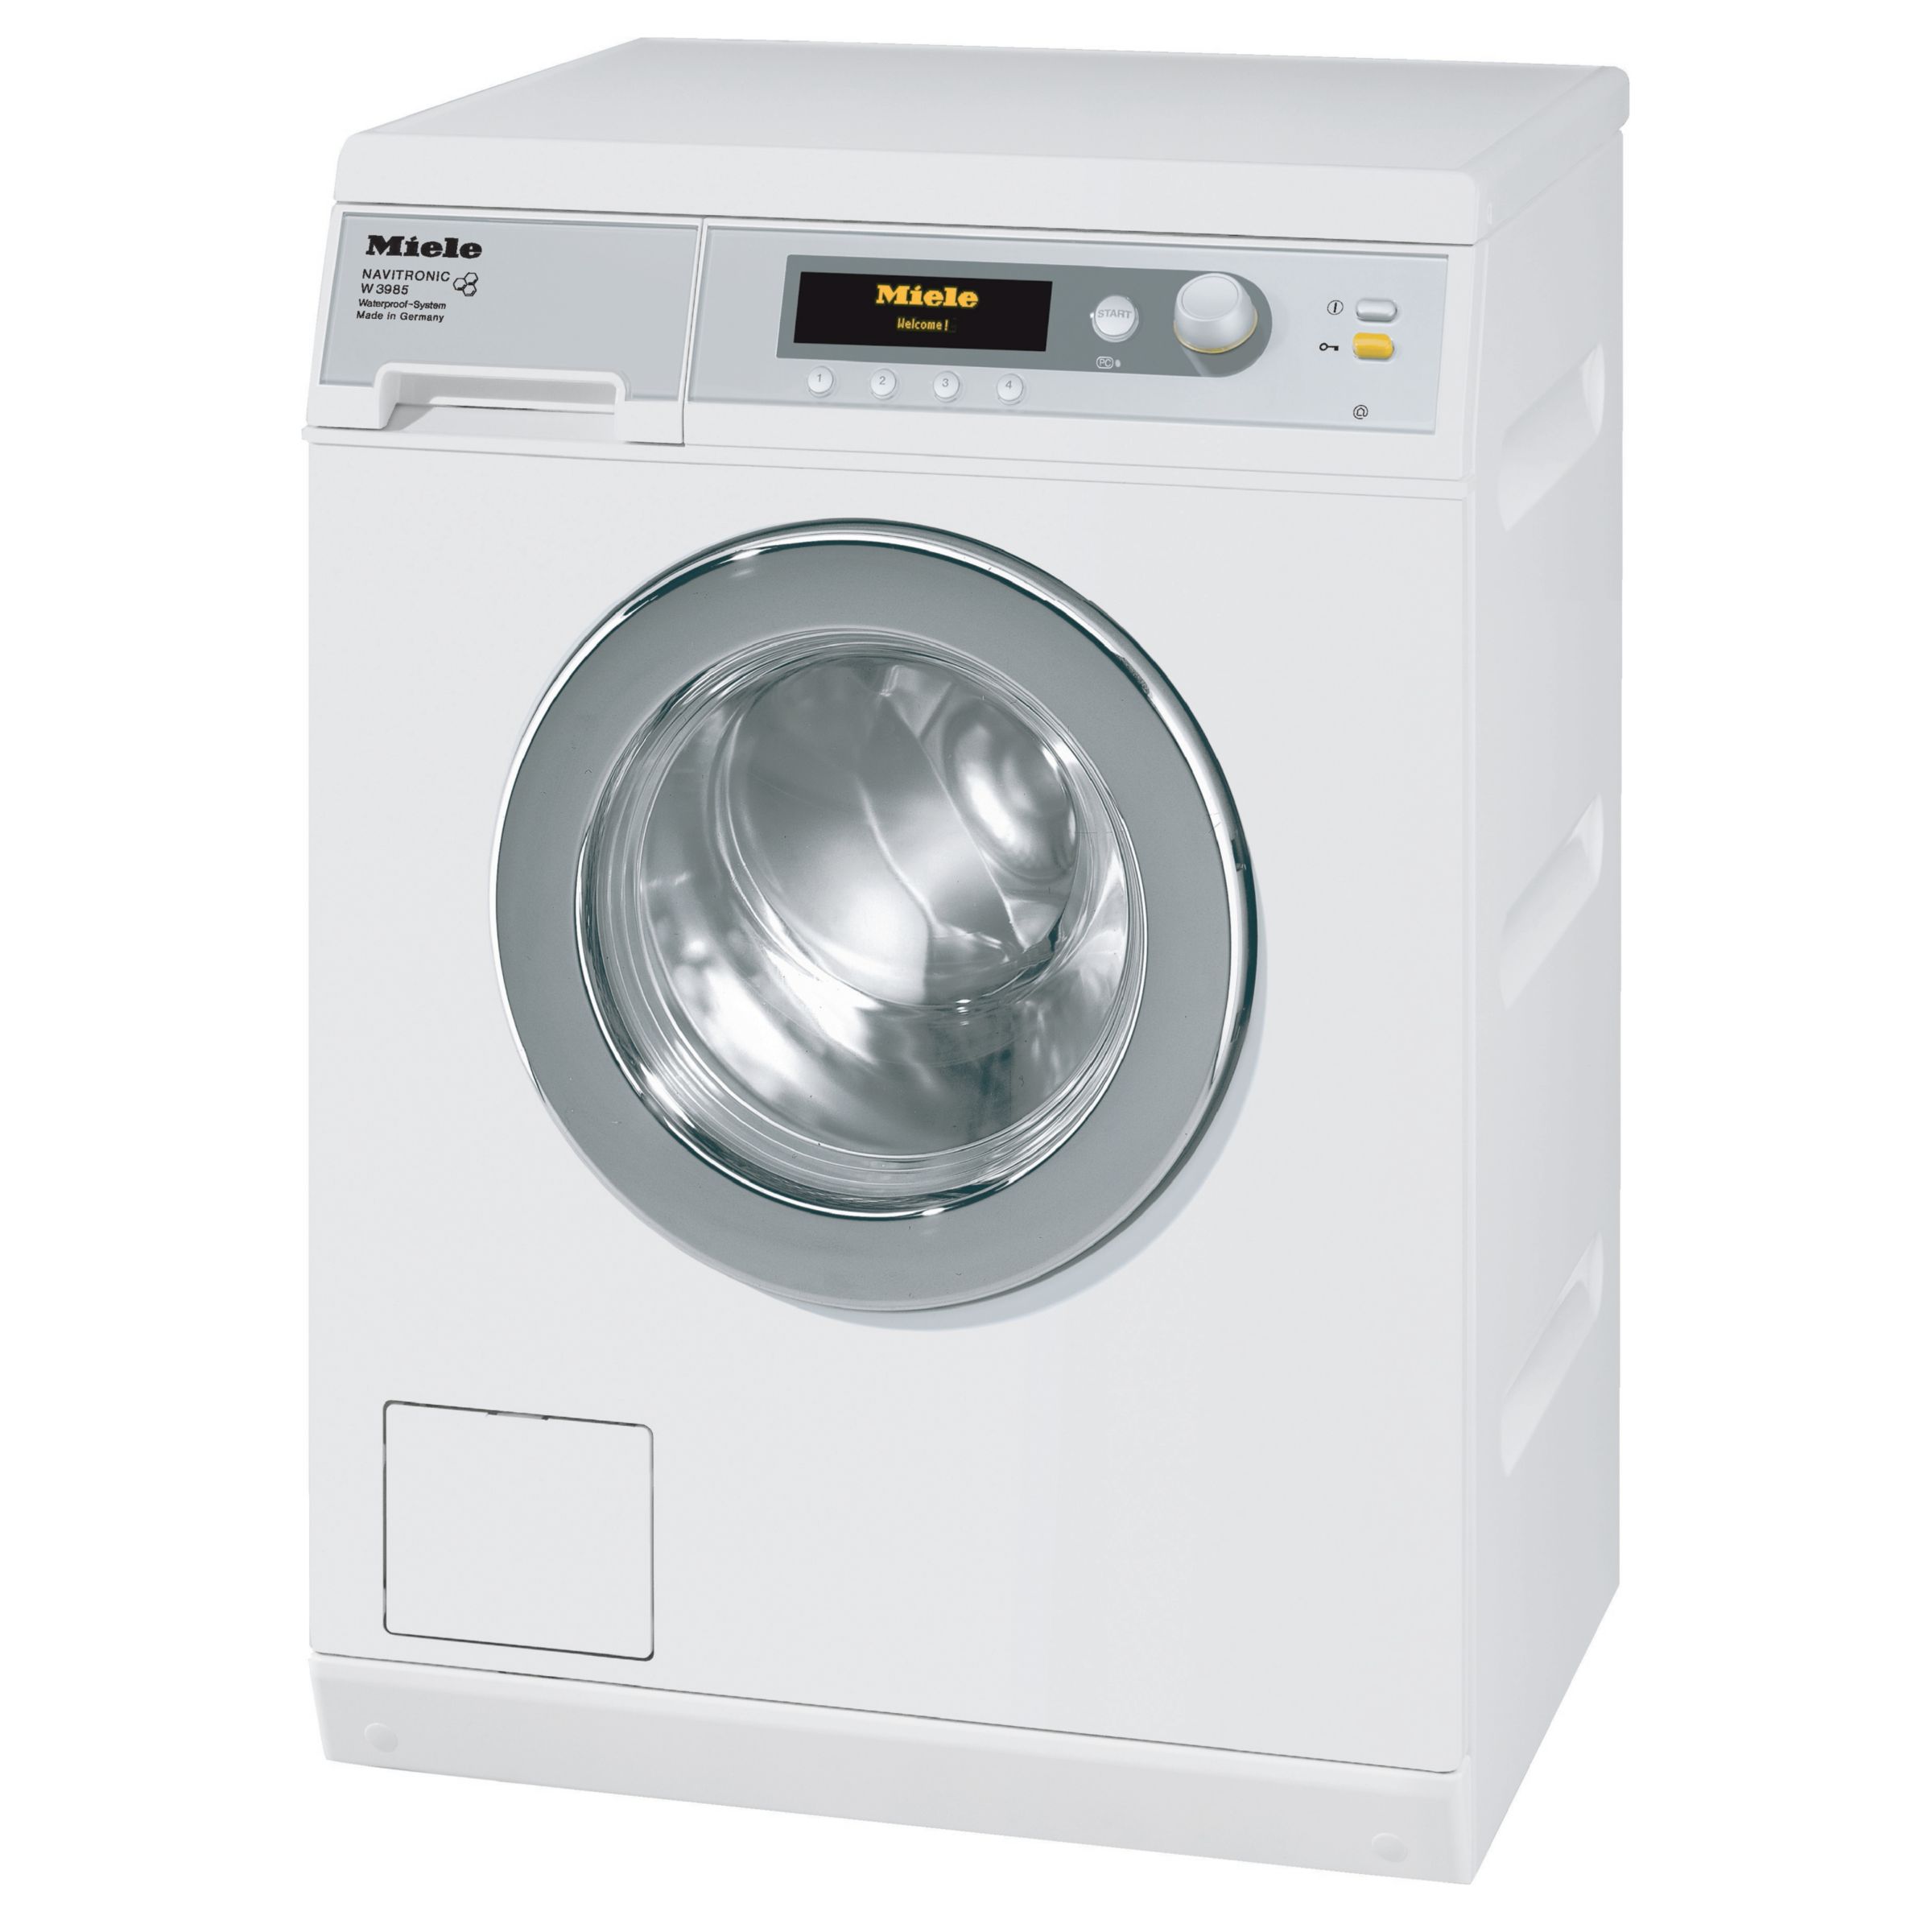 Miele W3985 WPS Washing Machine, White at JohnLewis